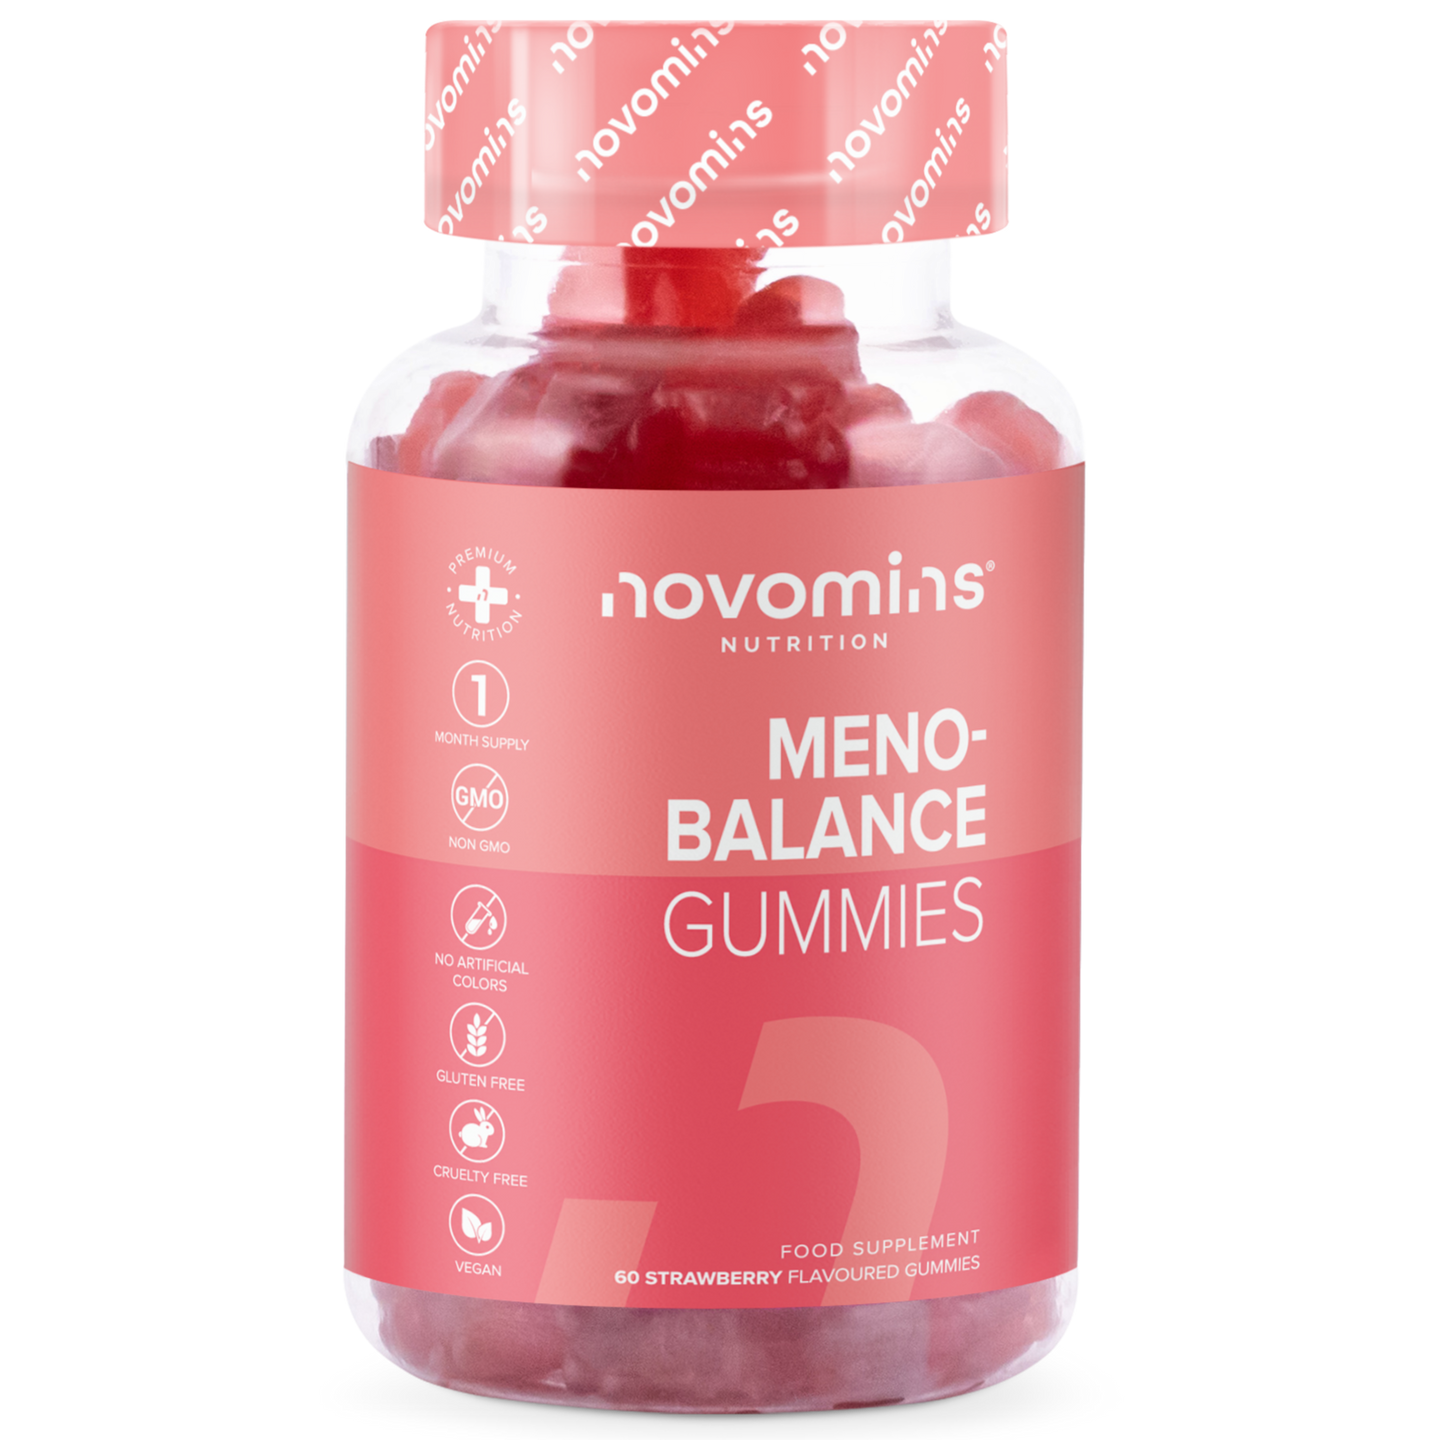 Novomins Nutrition Meno-Balance Gummies